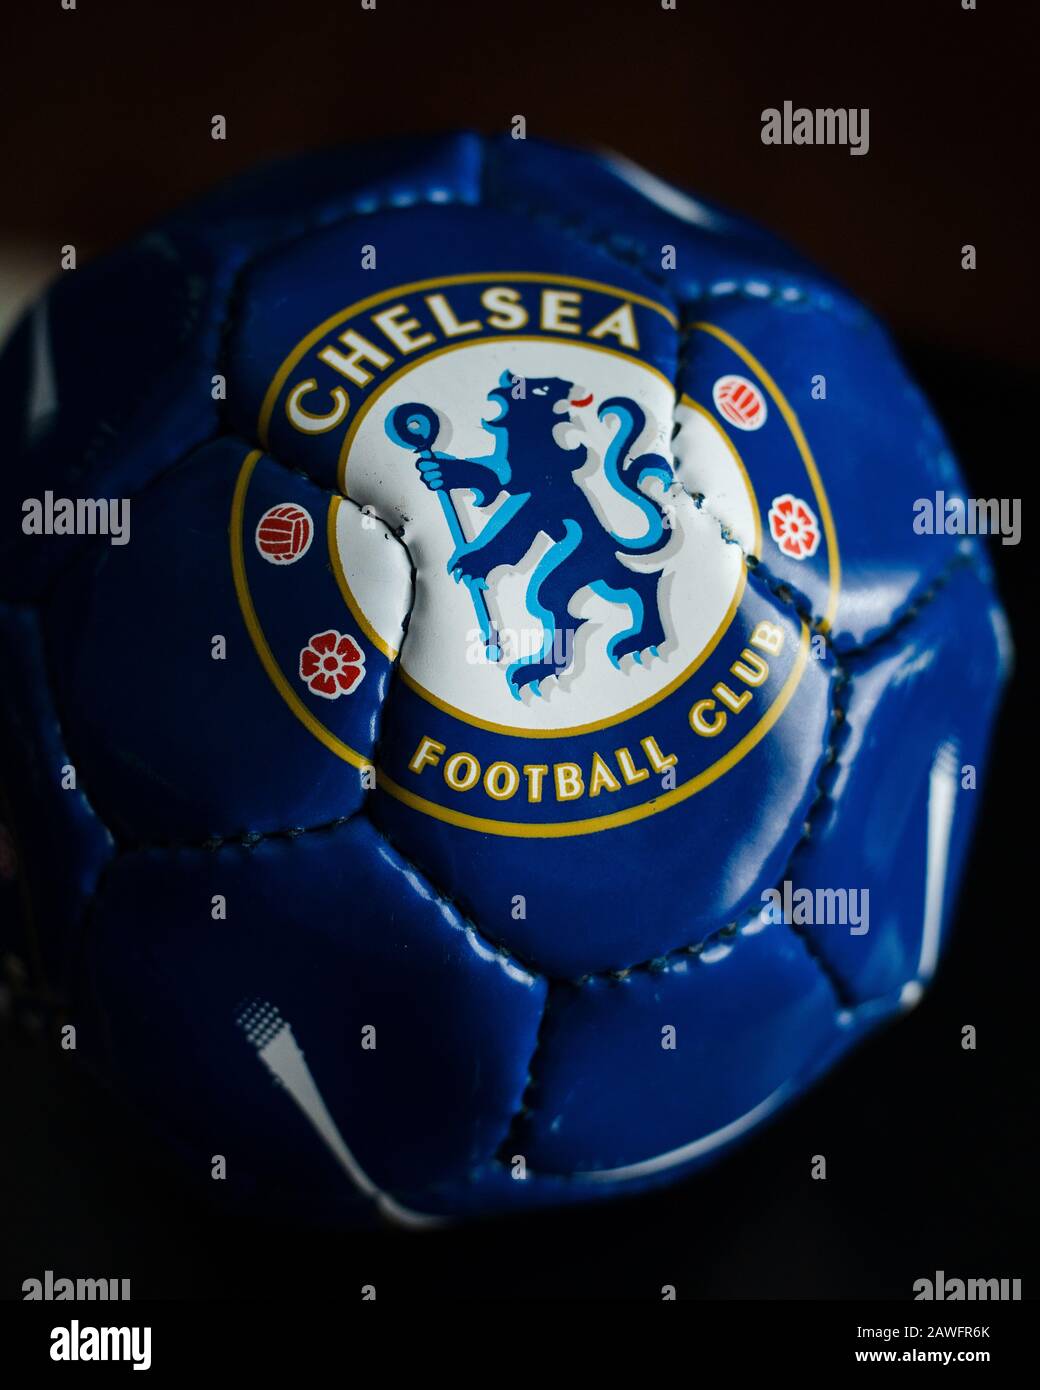 Nahaufnahme des Chelsea Football Club Logos auf einem blauen Mini-Fußballball Stockfoto